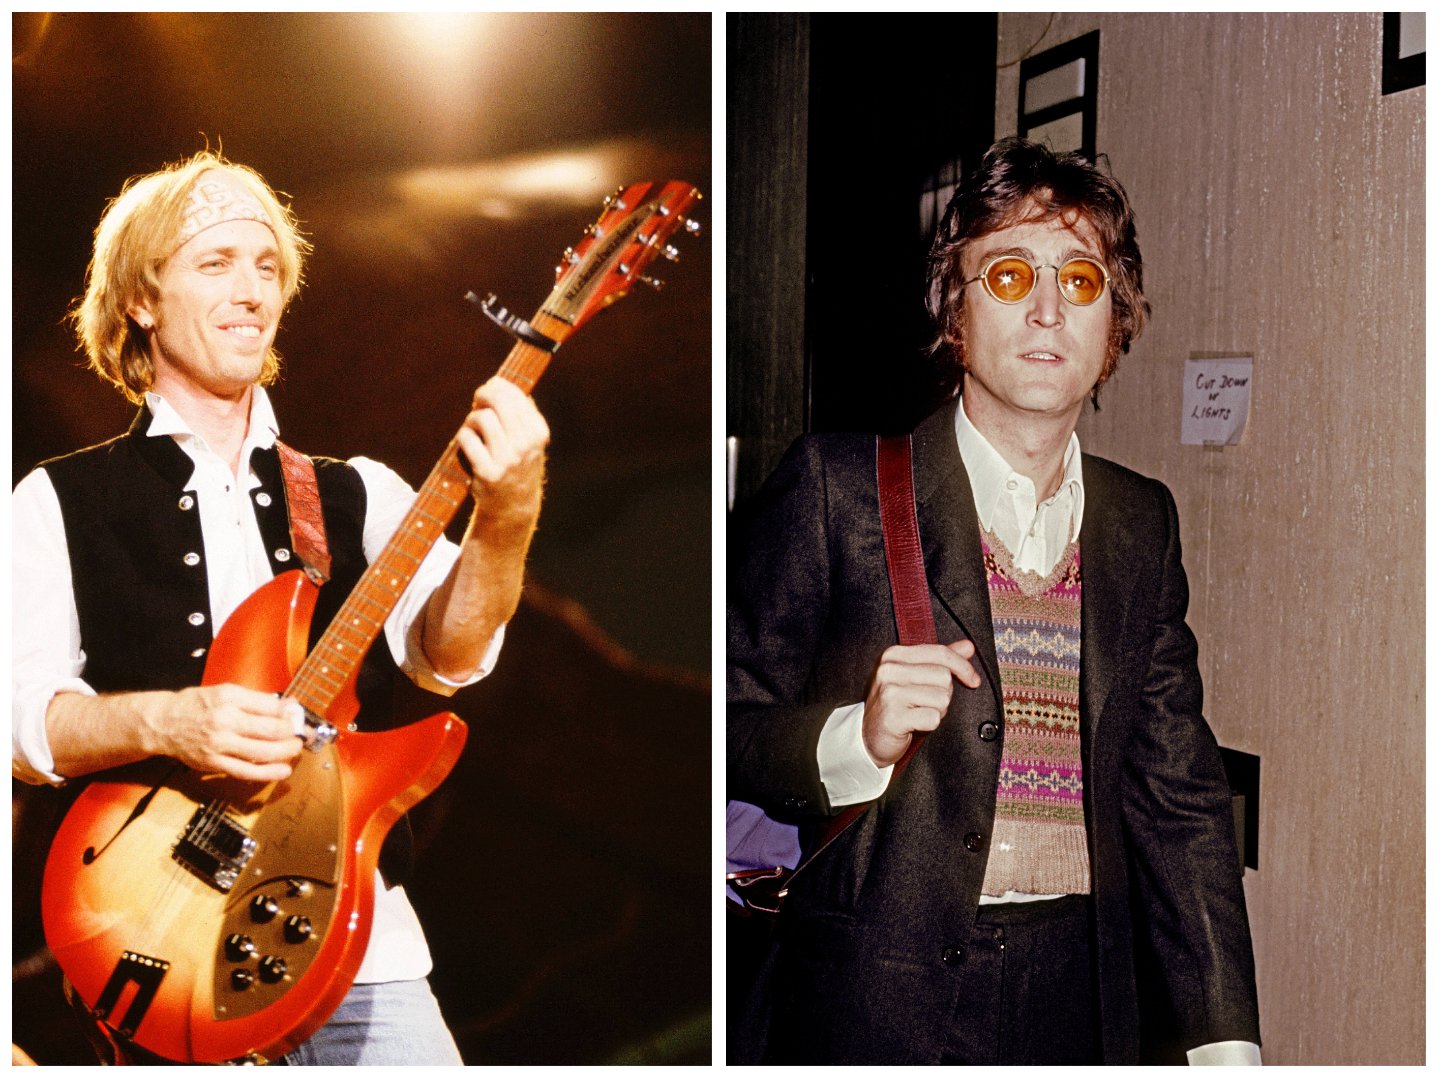 Tom Petty Said It Was Always Clear When John Lennon ‘Suffered’: ‘Lennon’s Legacy is Honesty’